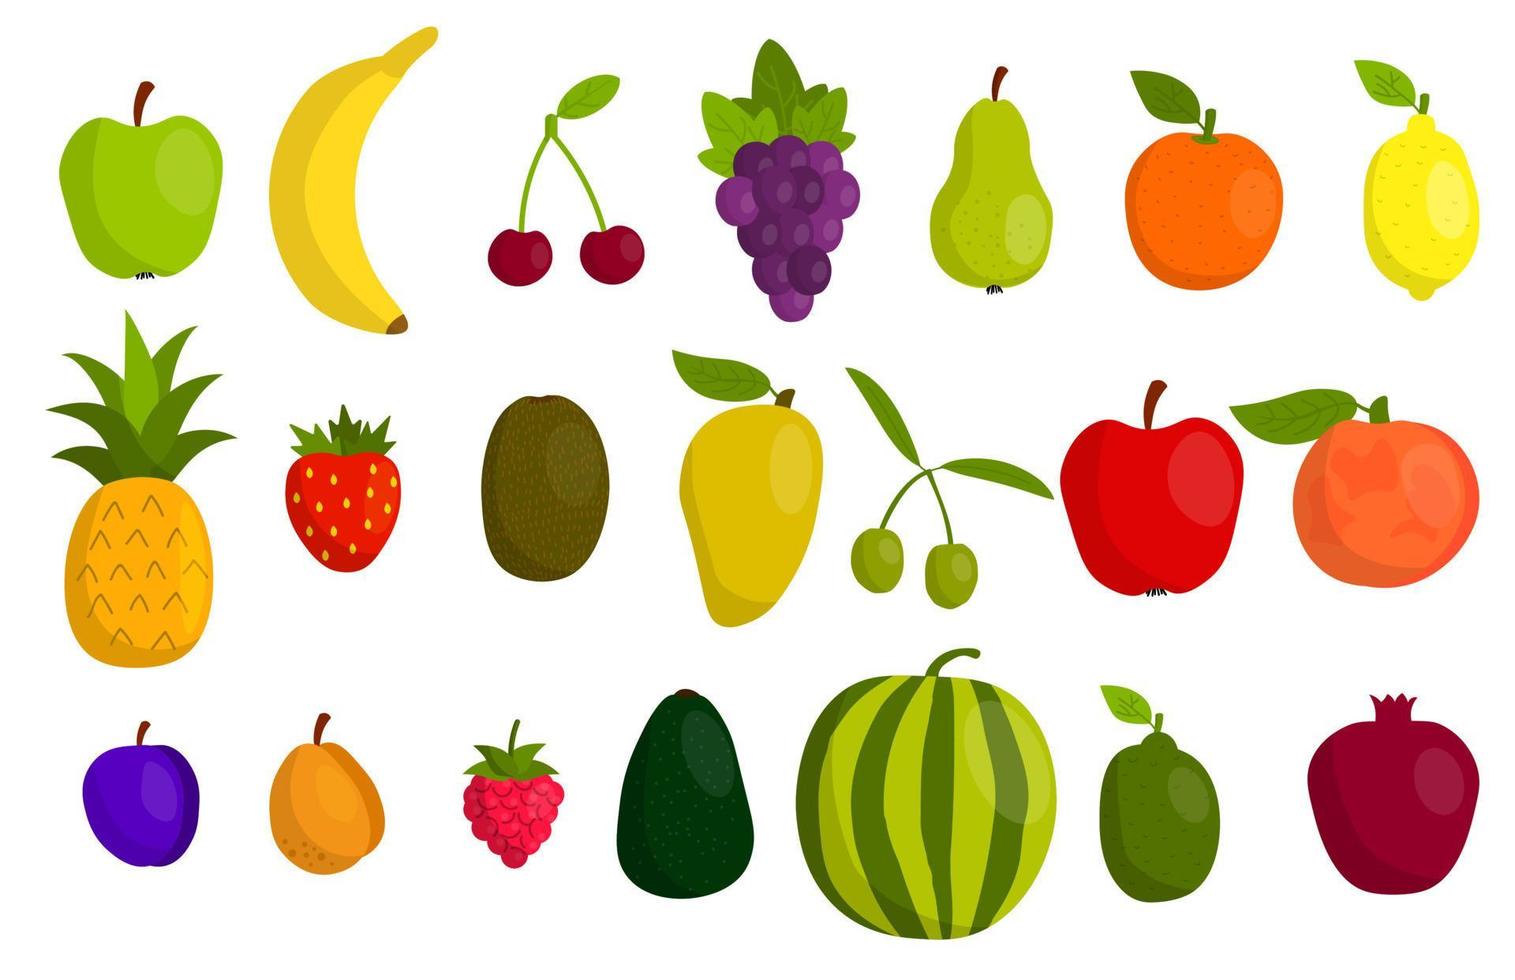 frutas bonito dos desenhos animados definido em estilo simples, isolado no fundo branco. ícones. vetor